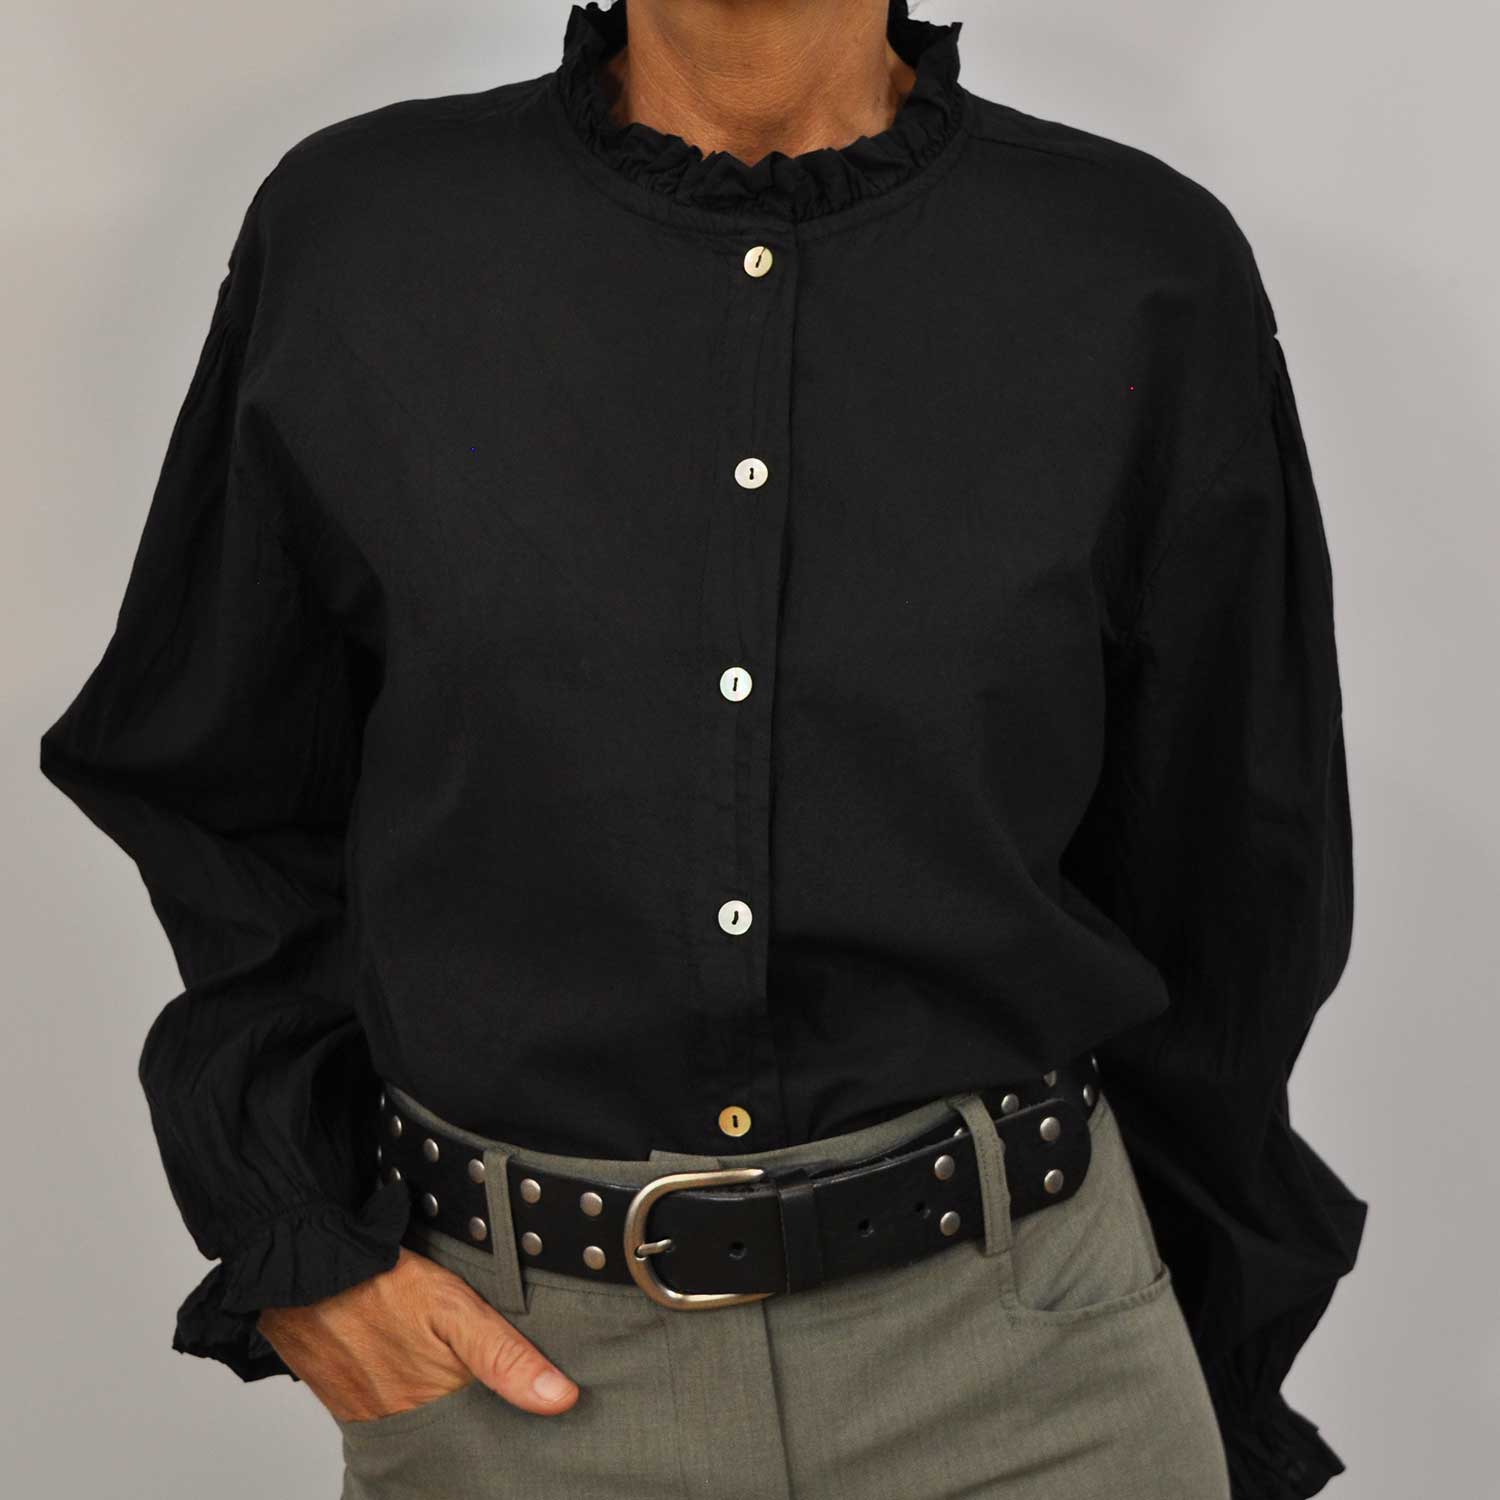 Black ruffle collar blouse